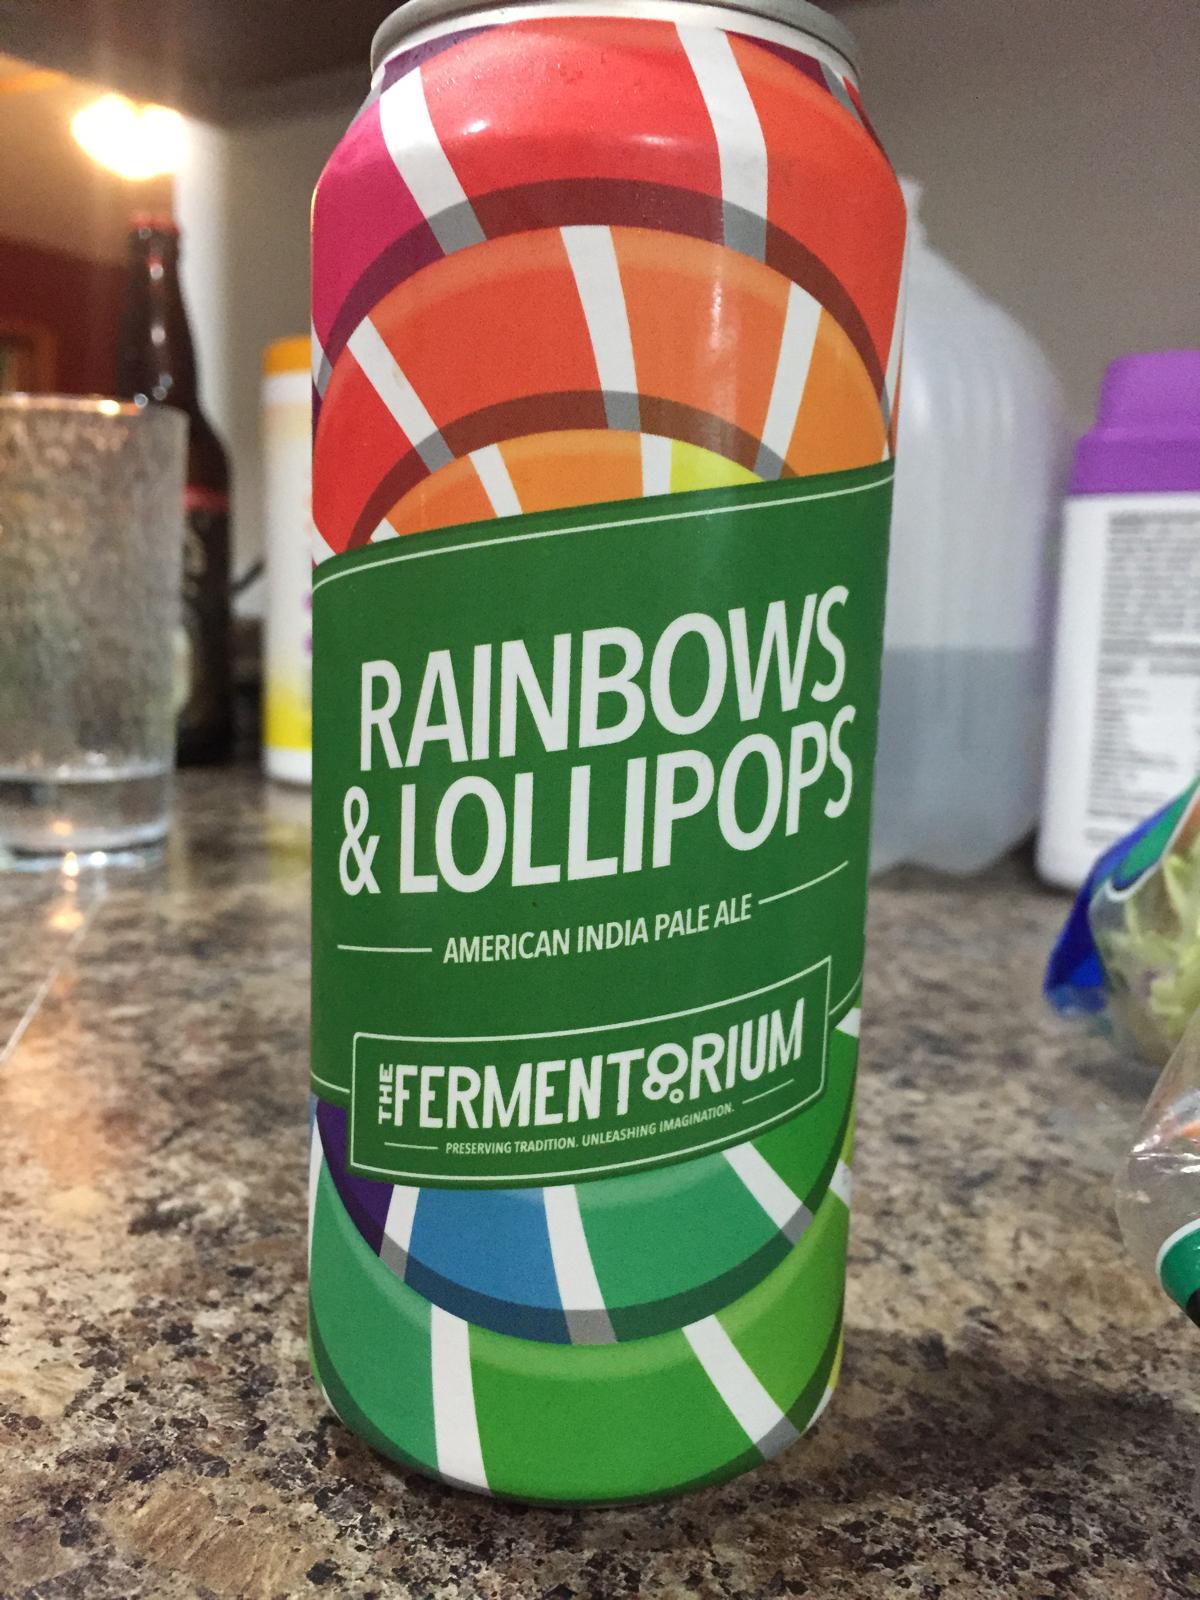 Rainbows & Lollipops